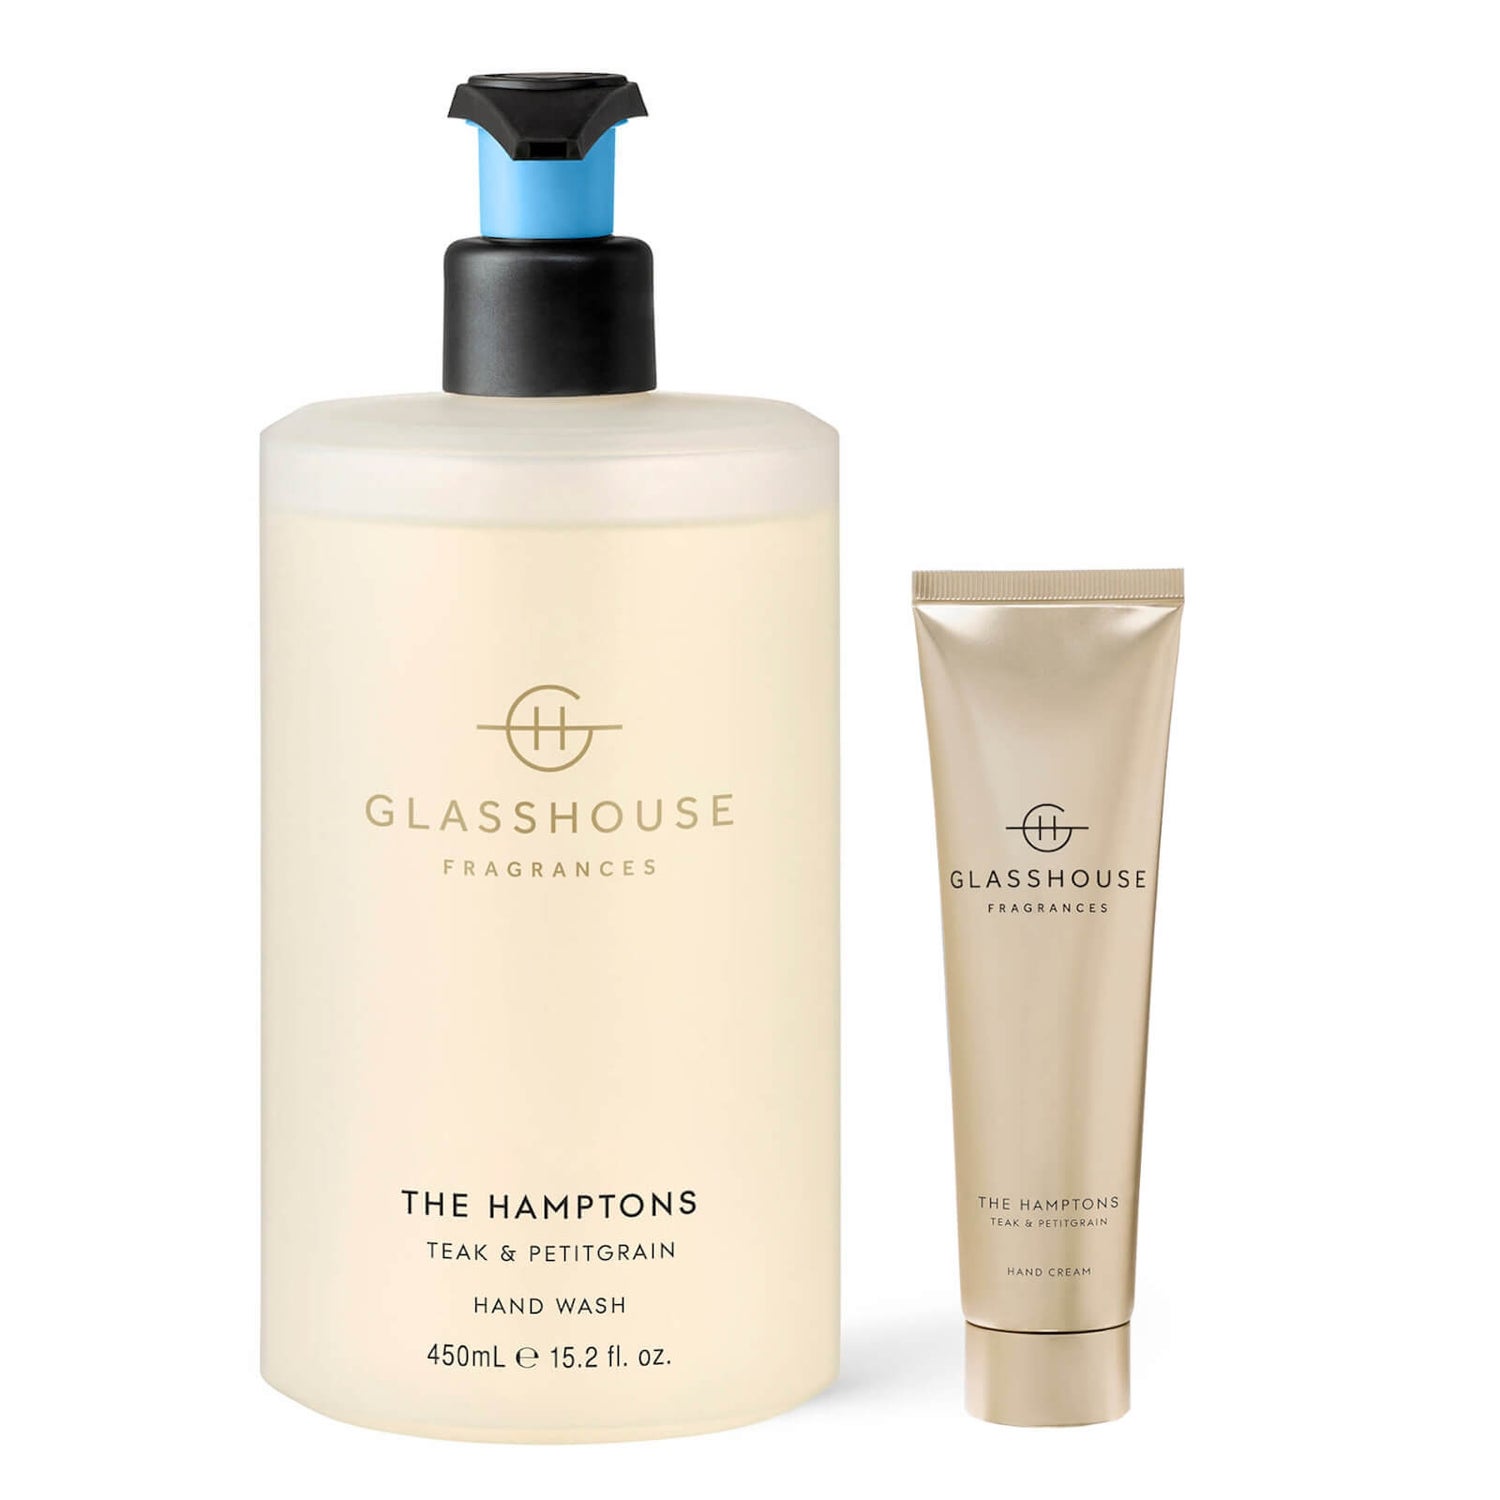 Glasshouse Hand Wash and Cream - The Hamptons